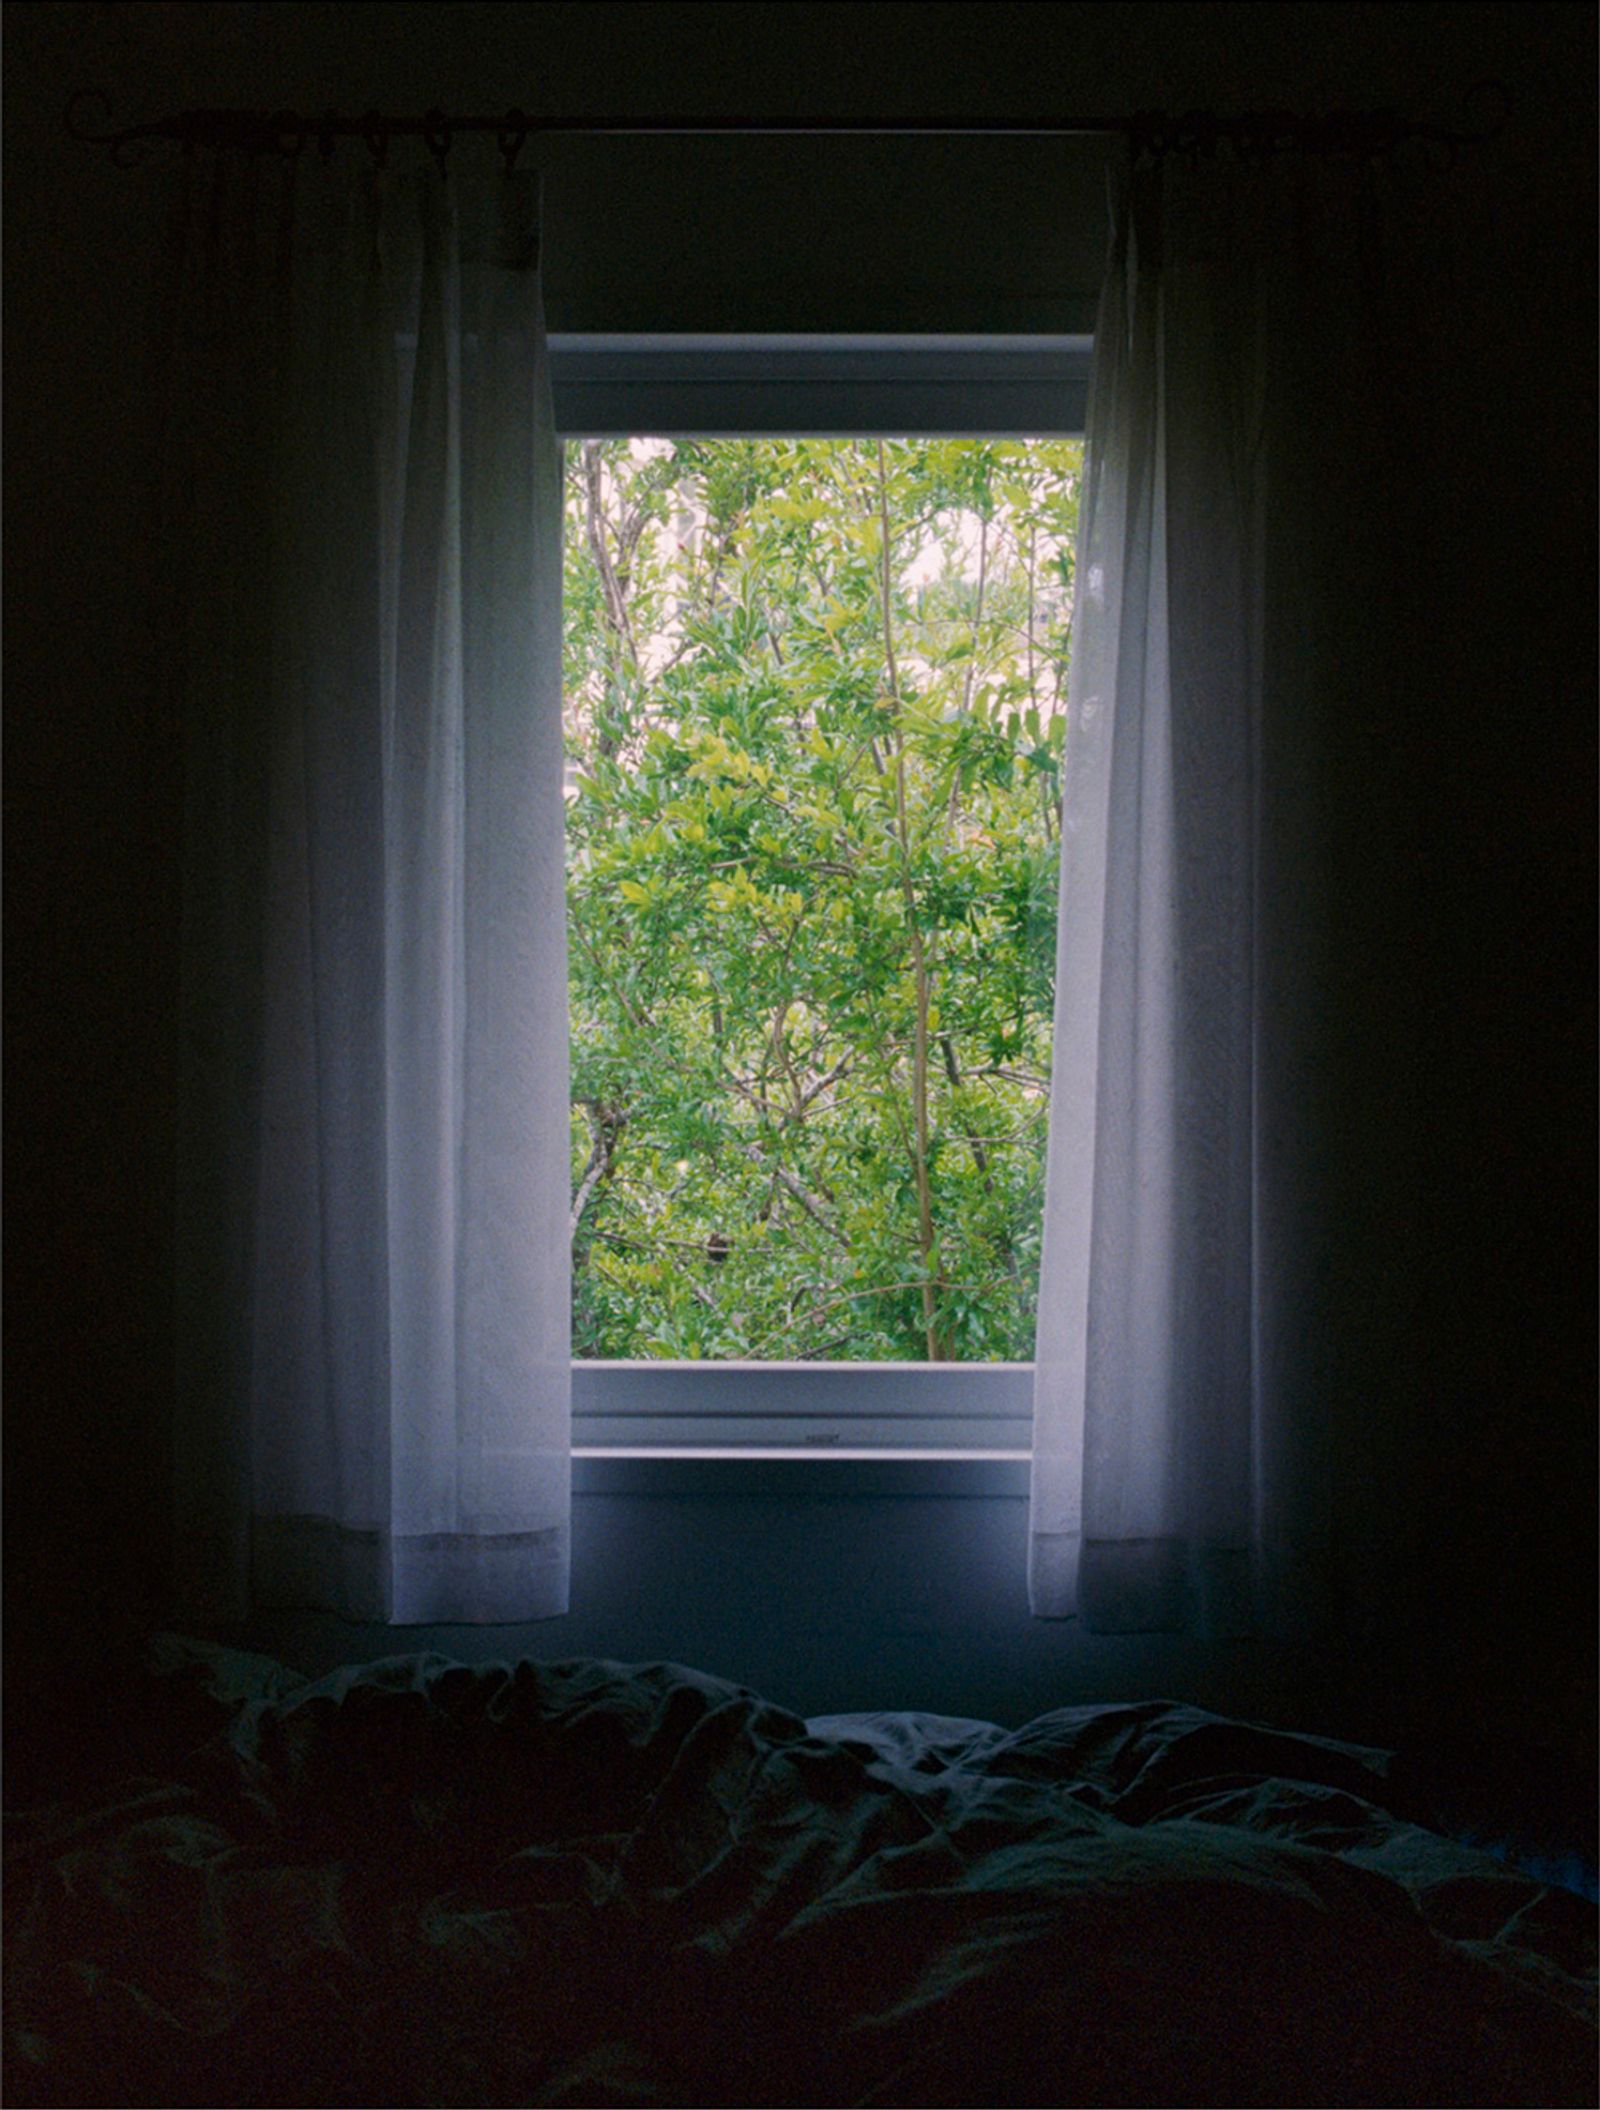 © Doron Oved - My window, 2014